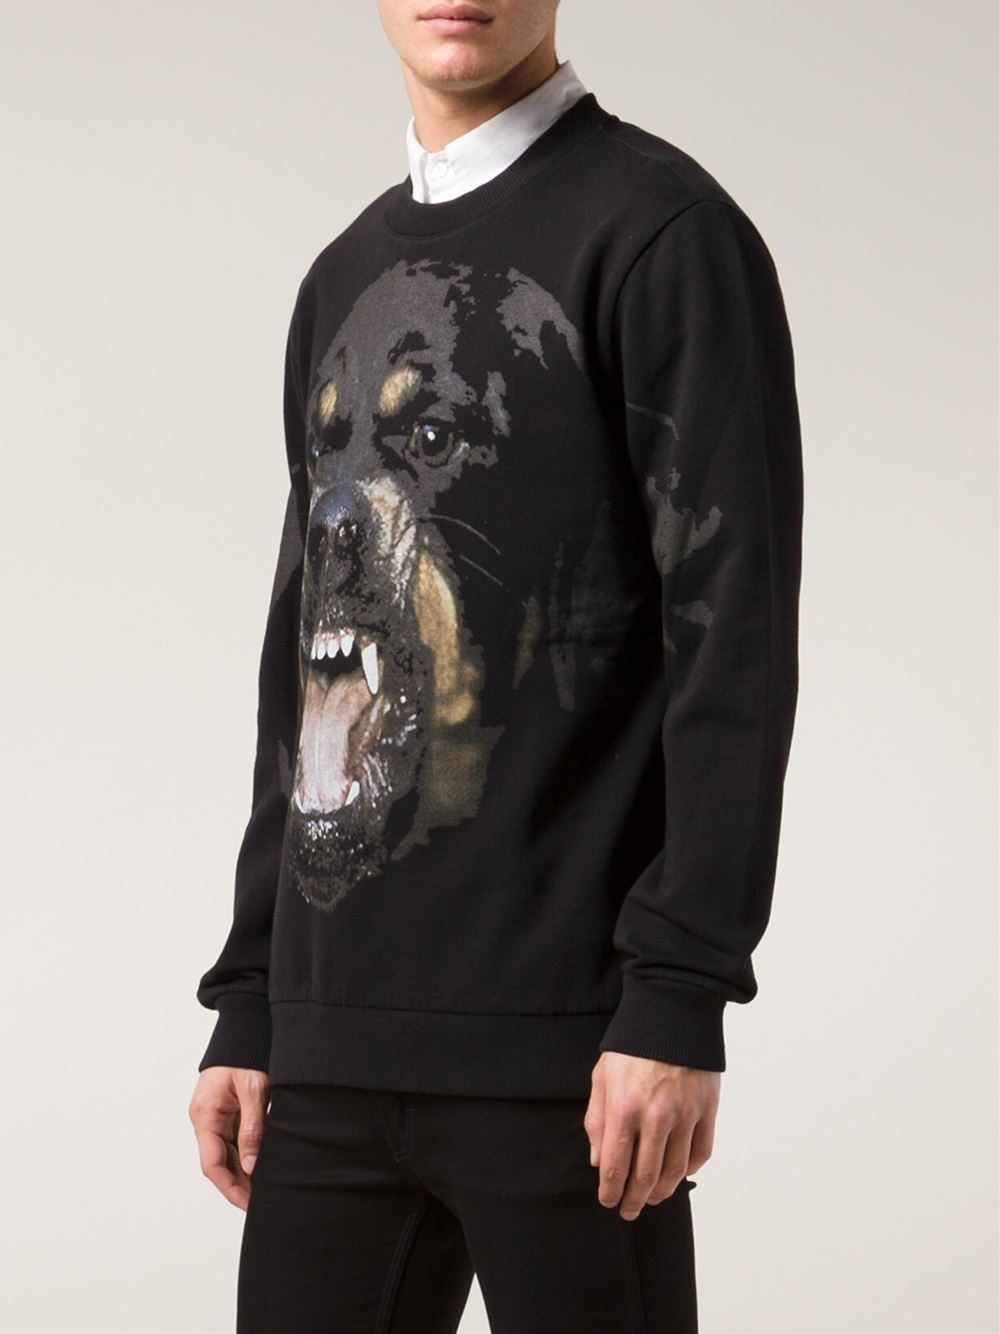 Lyst - Givenchy Rottweiler Print Sweatshirt in Black for Men